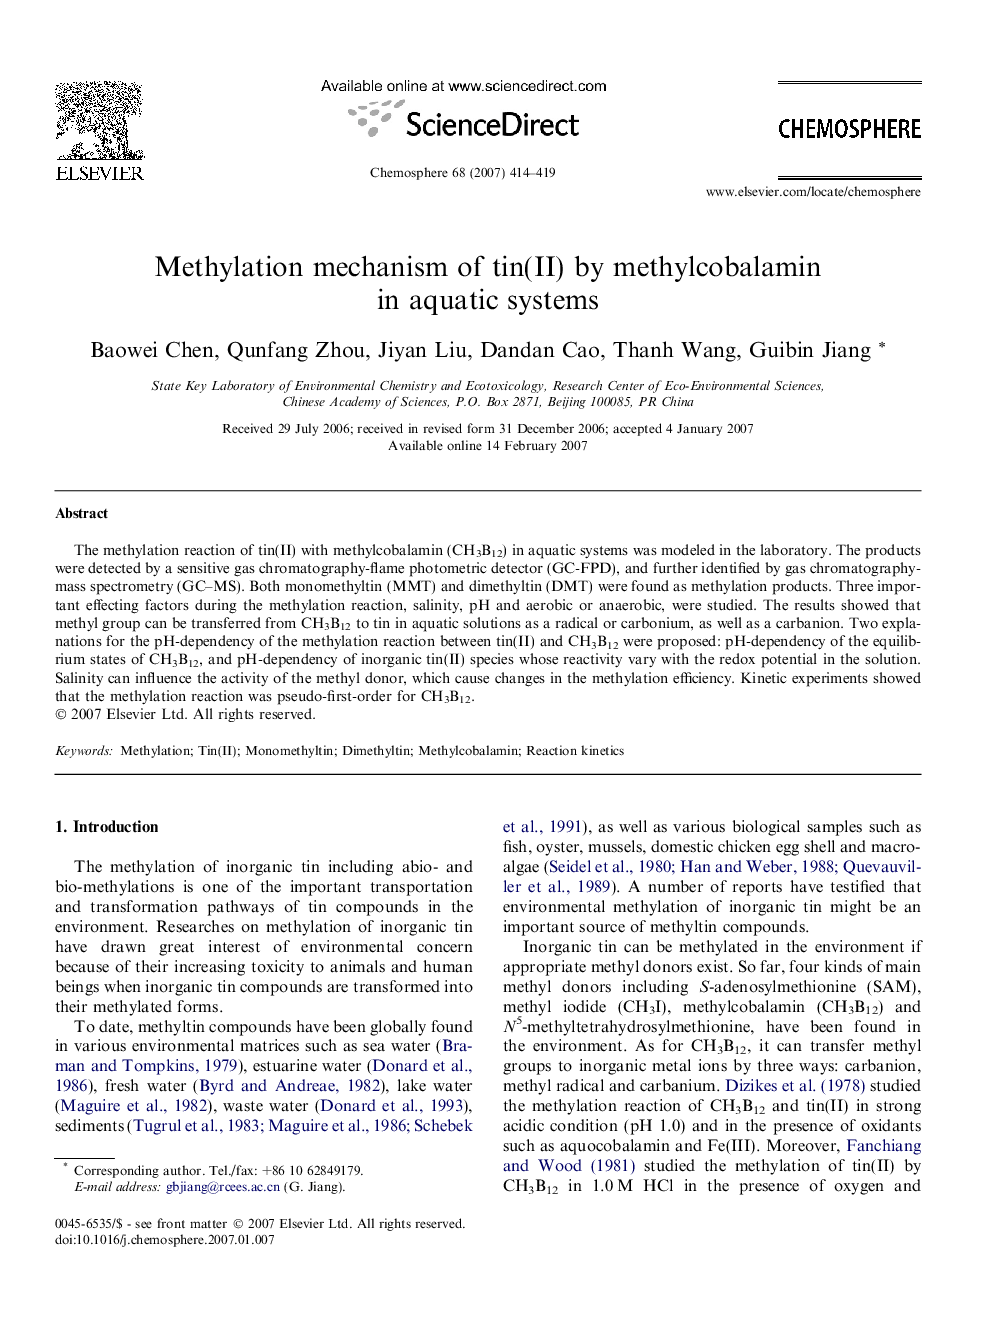 Methylation mechanism of tin(II) by methylcobalamin in aquatic systems